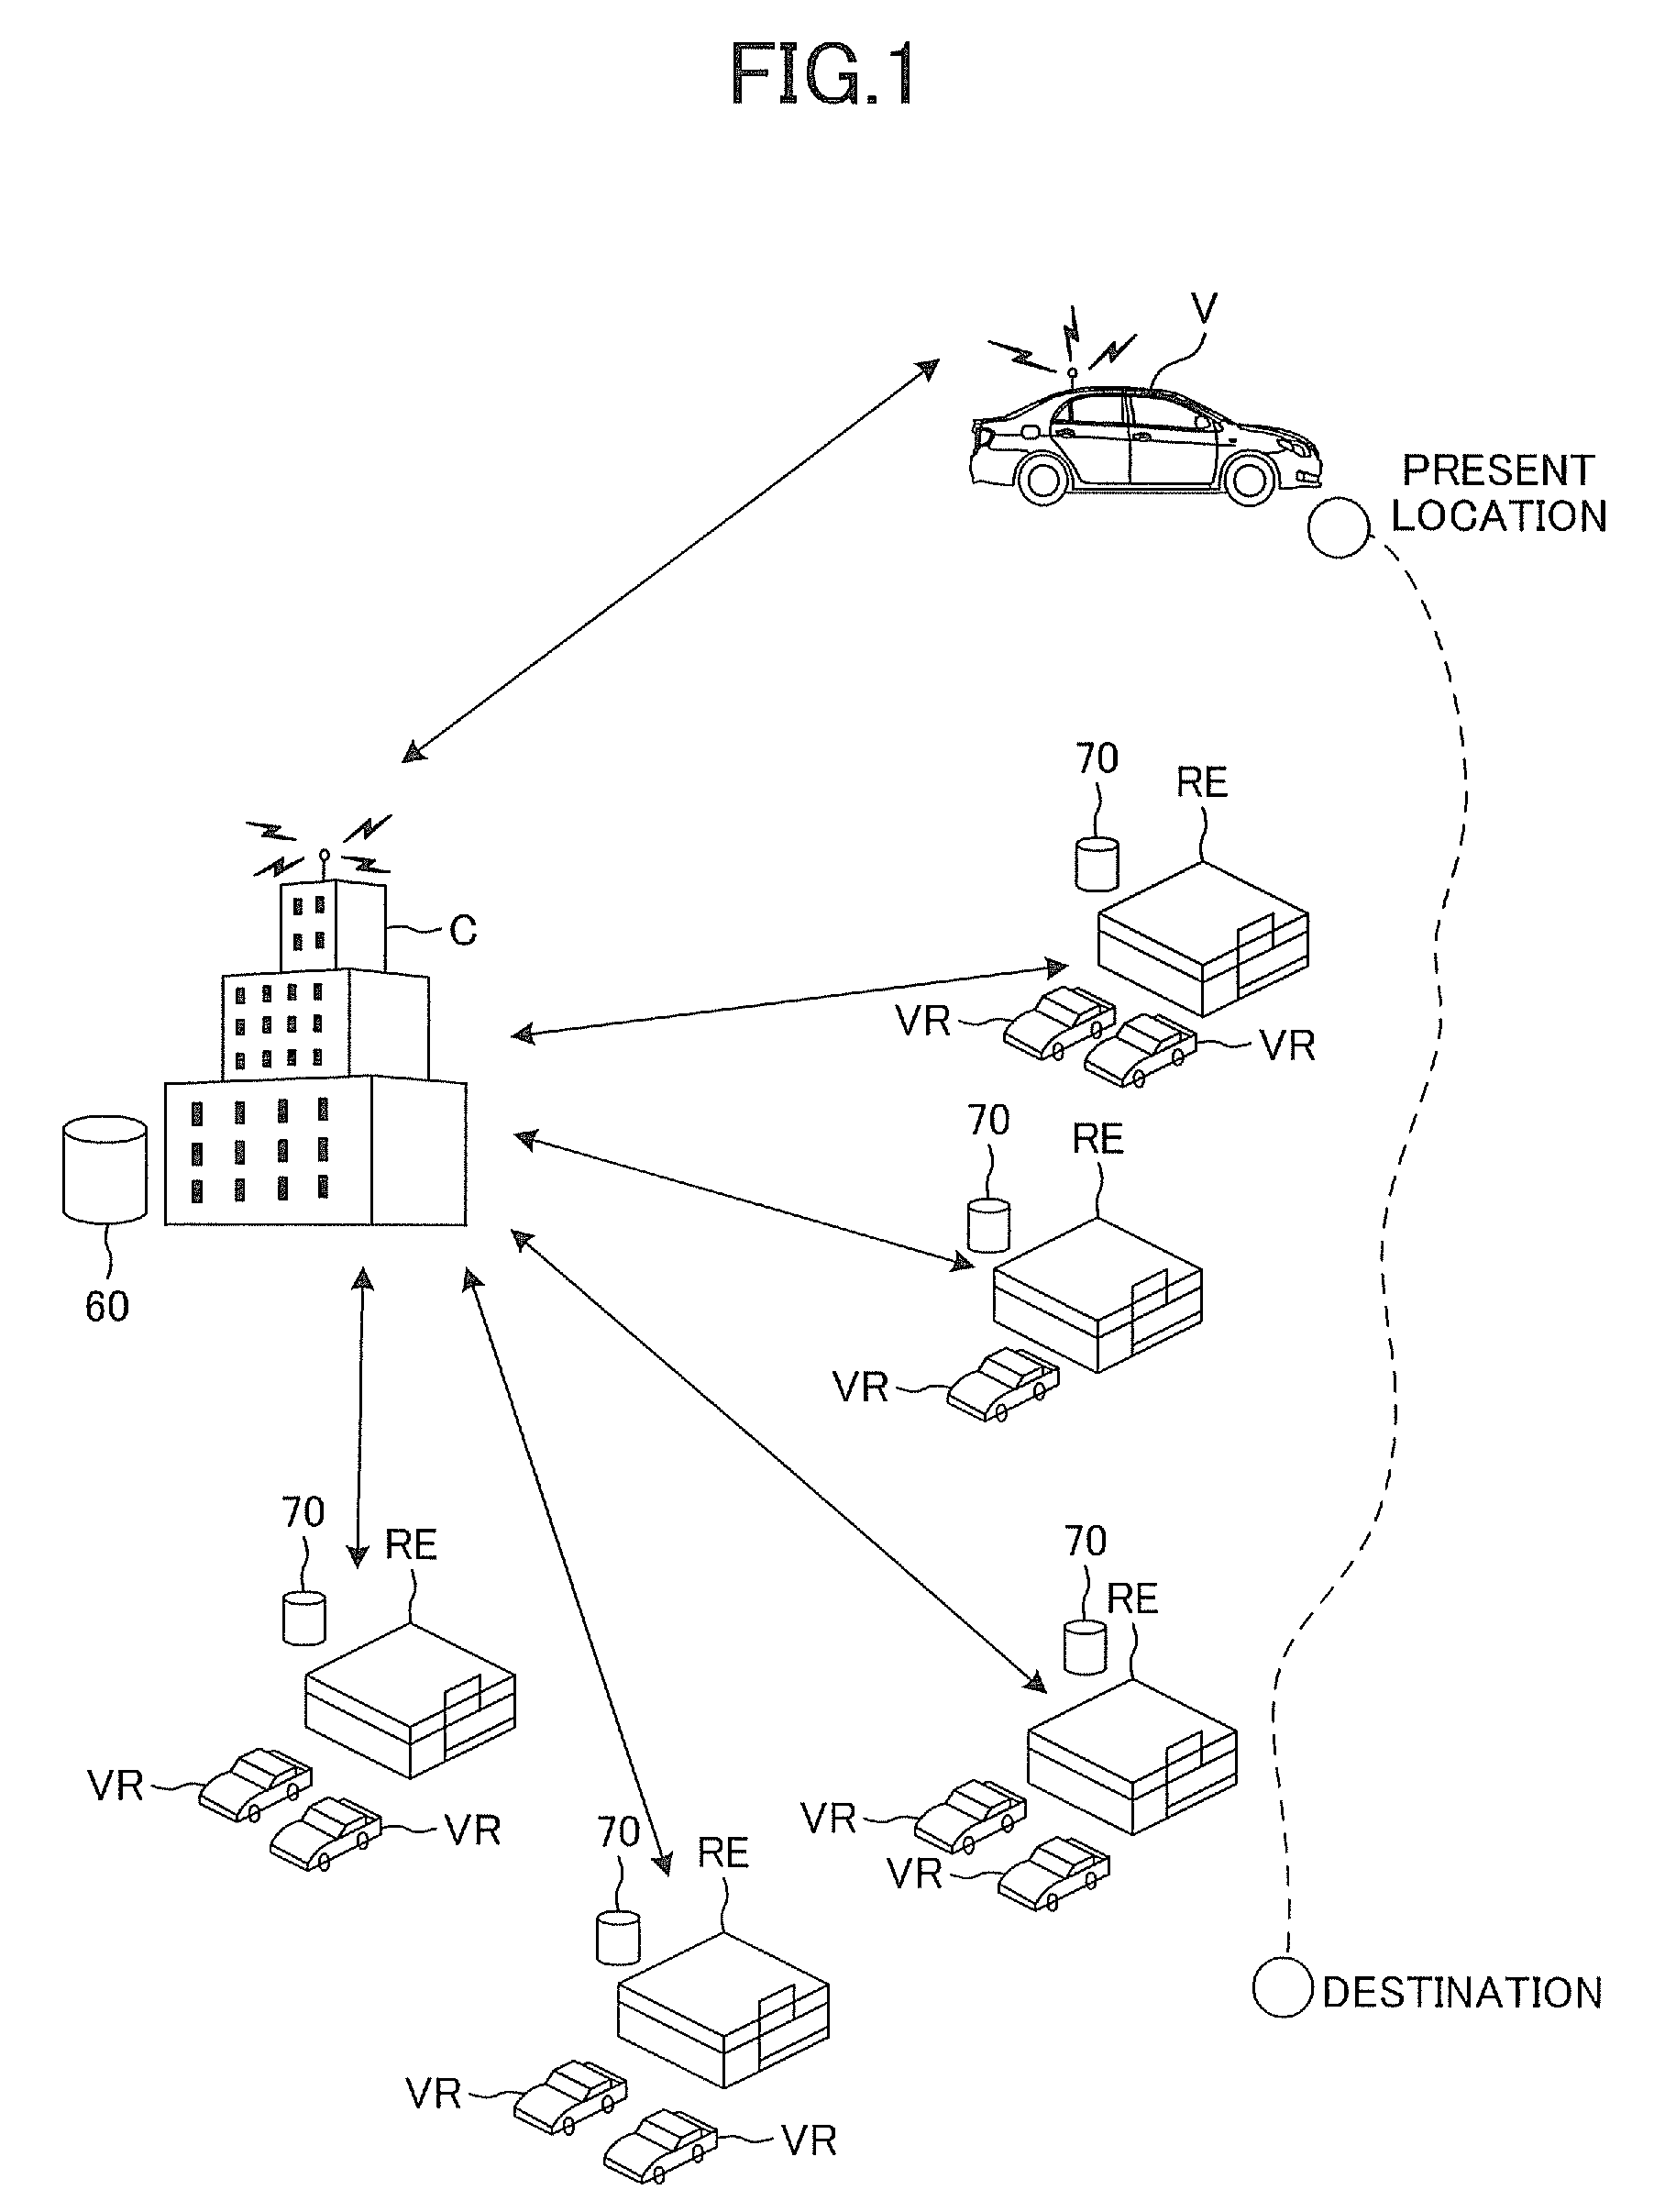 Information provision apparatus